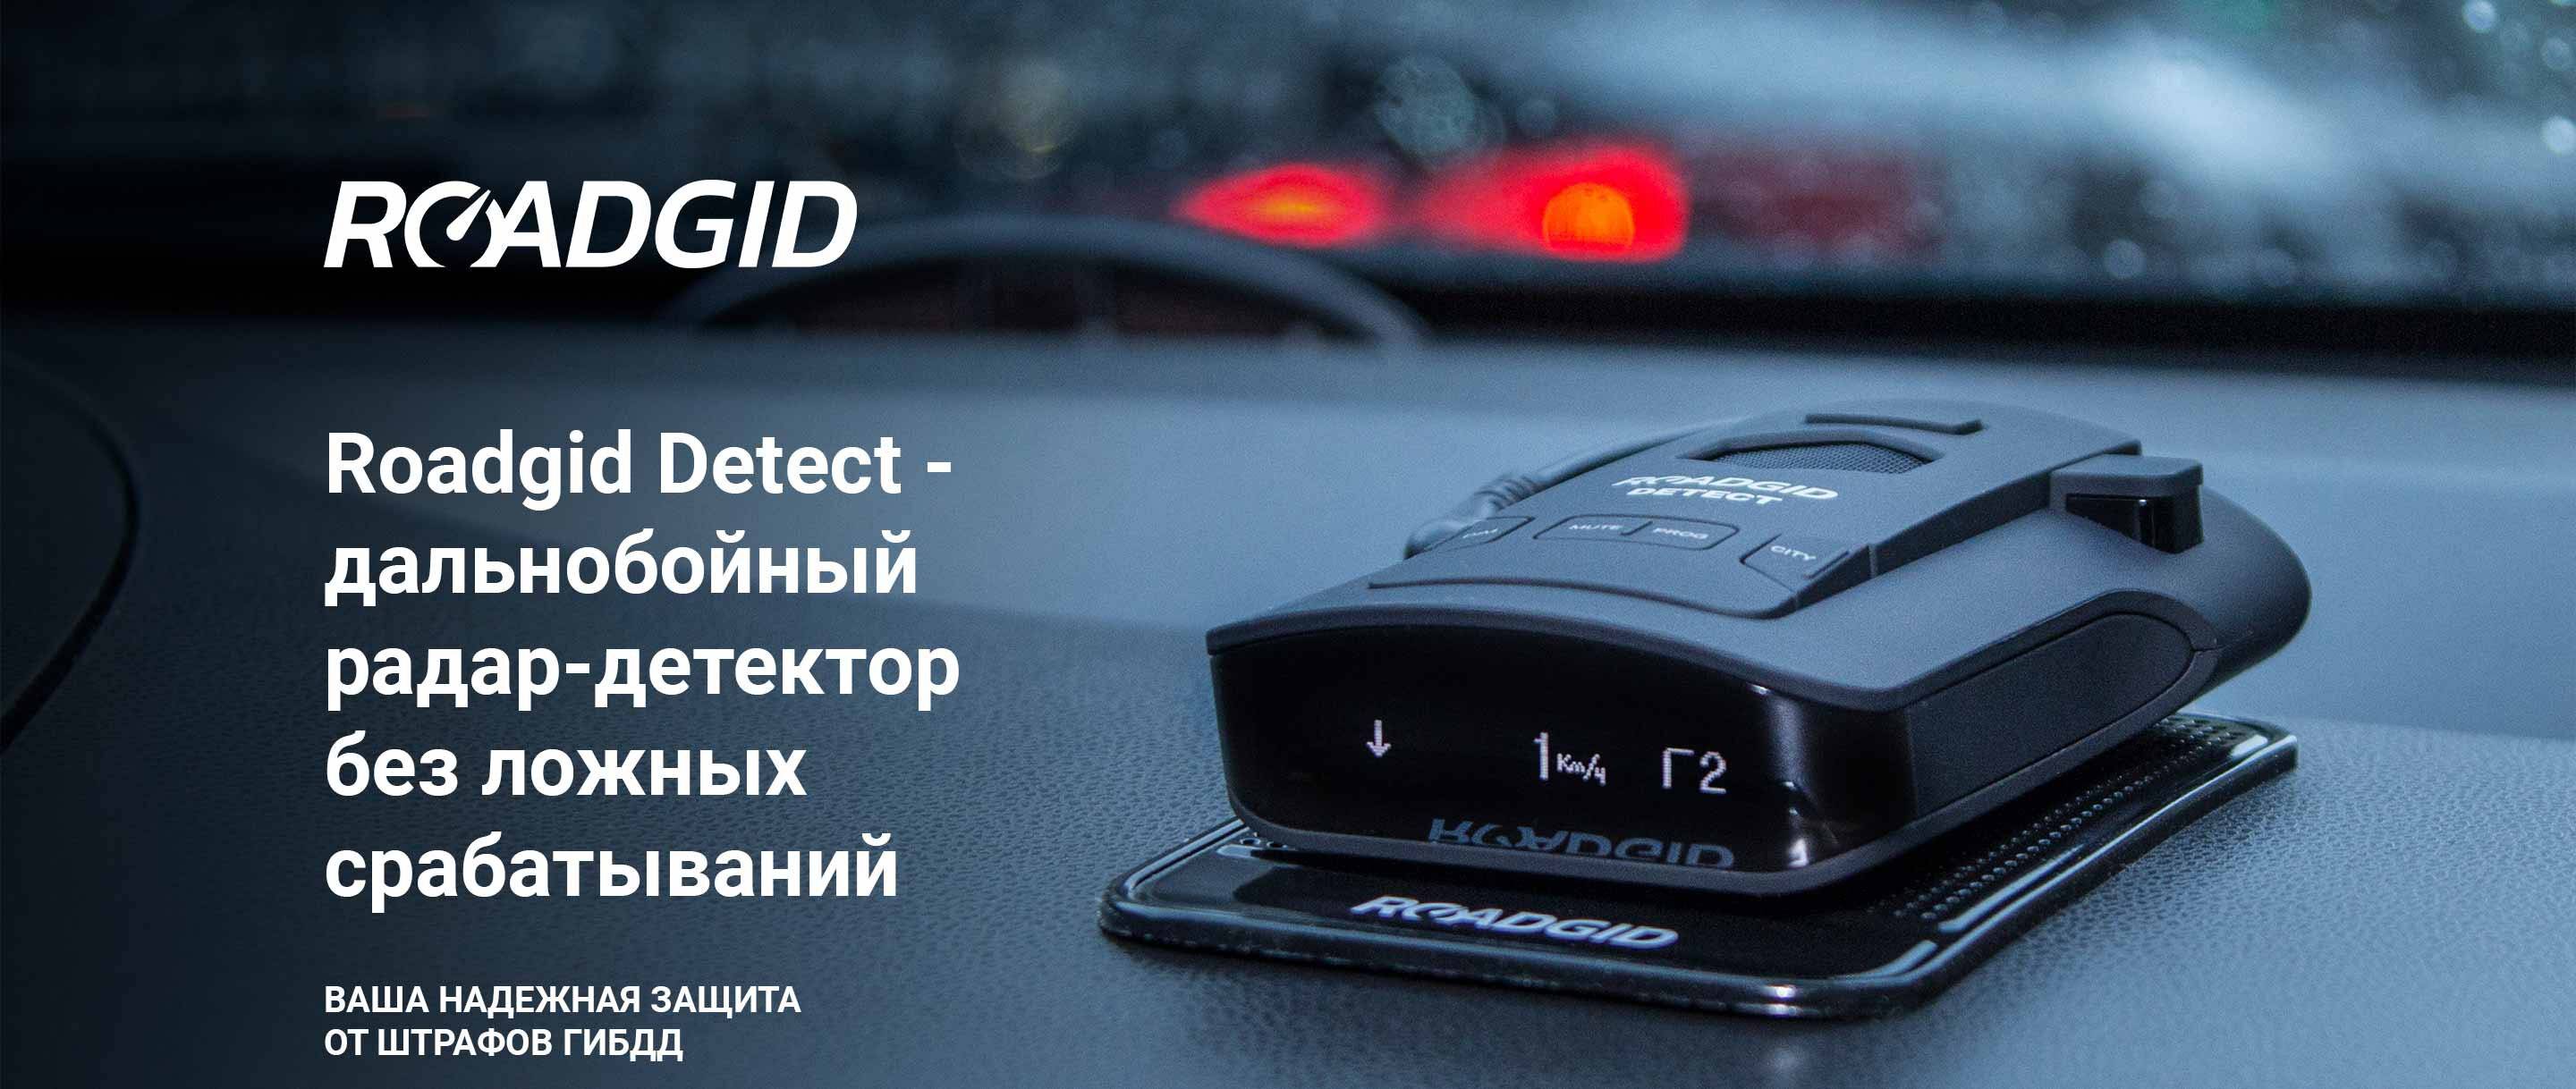 Roadgid detect - радар-детектор с сигнатурами и gps | обзор роадгид детект, тестирование и настройка антирадара